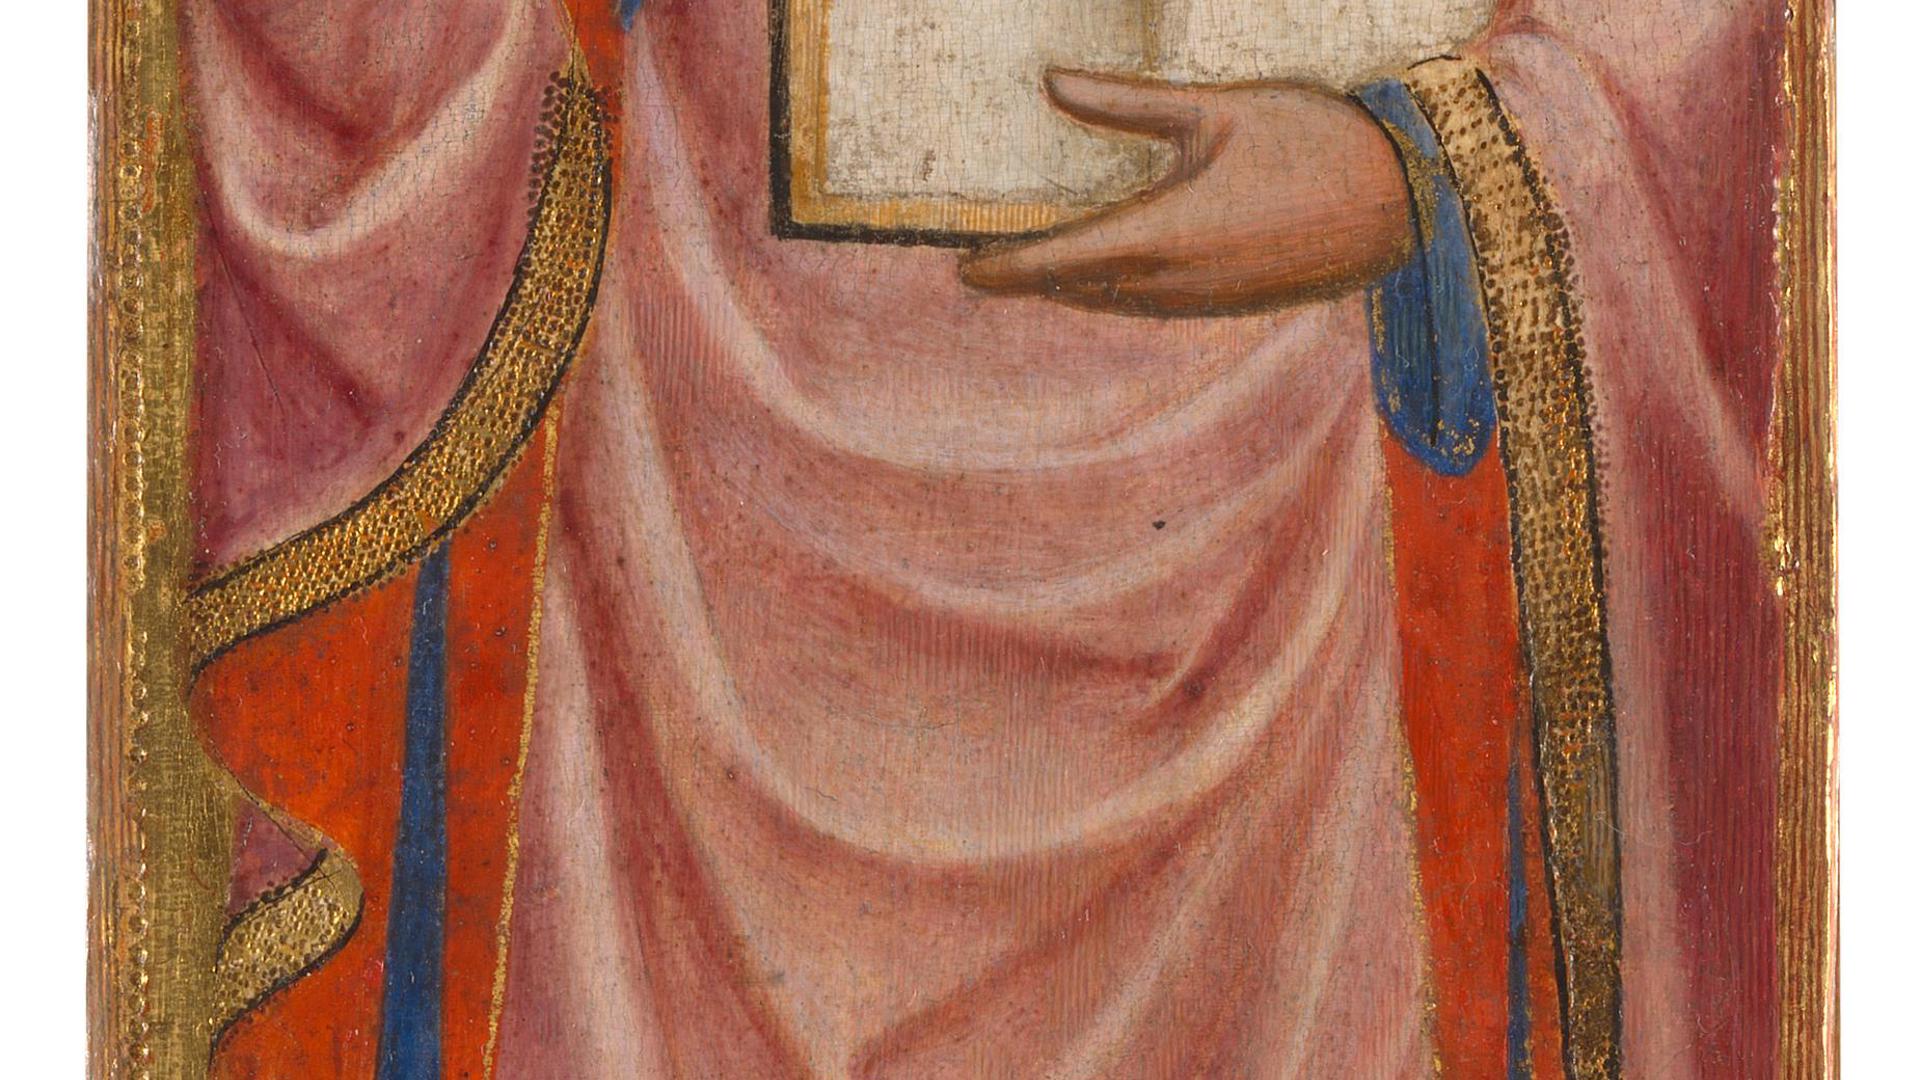 Saint John the Evangelist by Jacopo di Cione and workshop